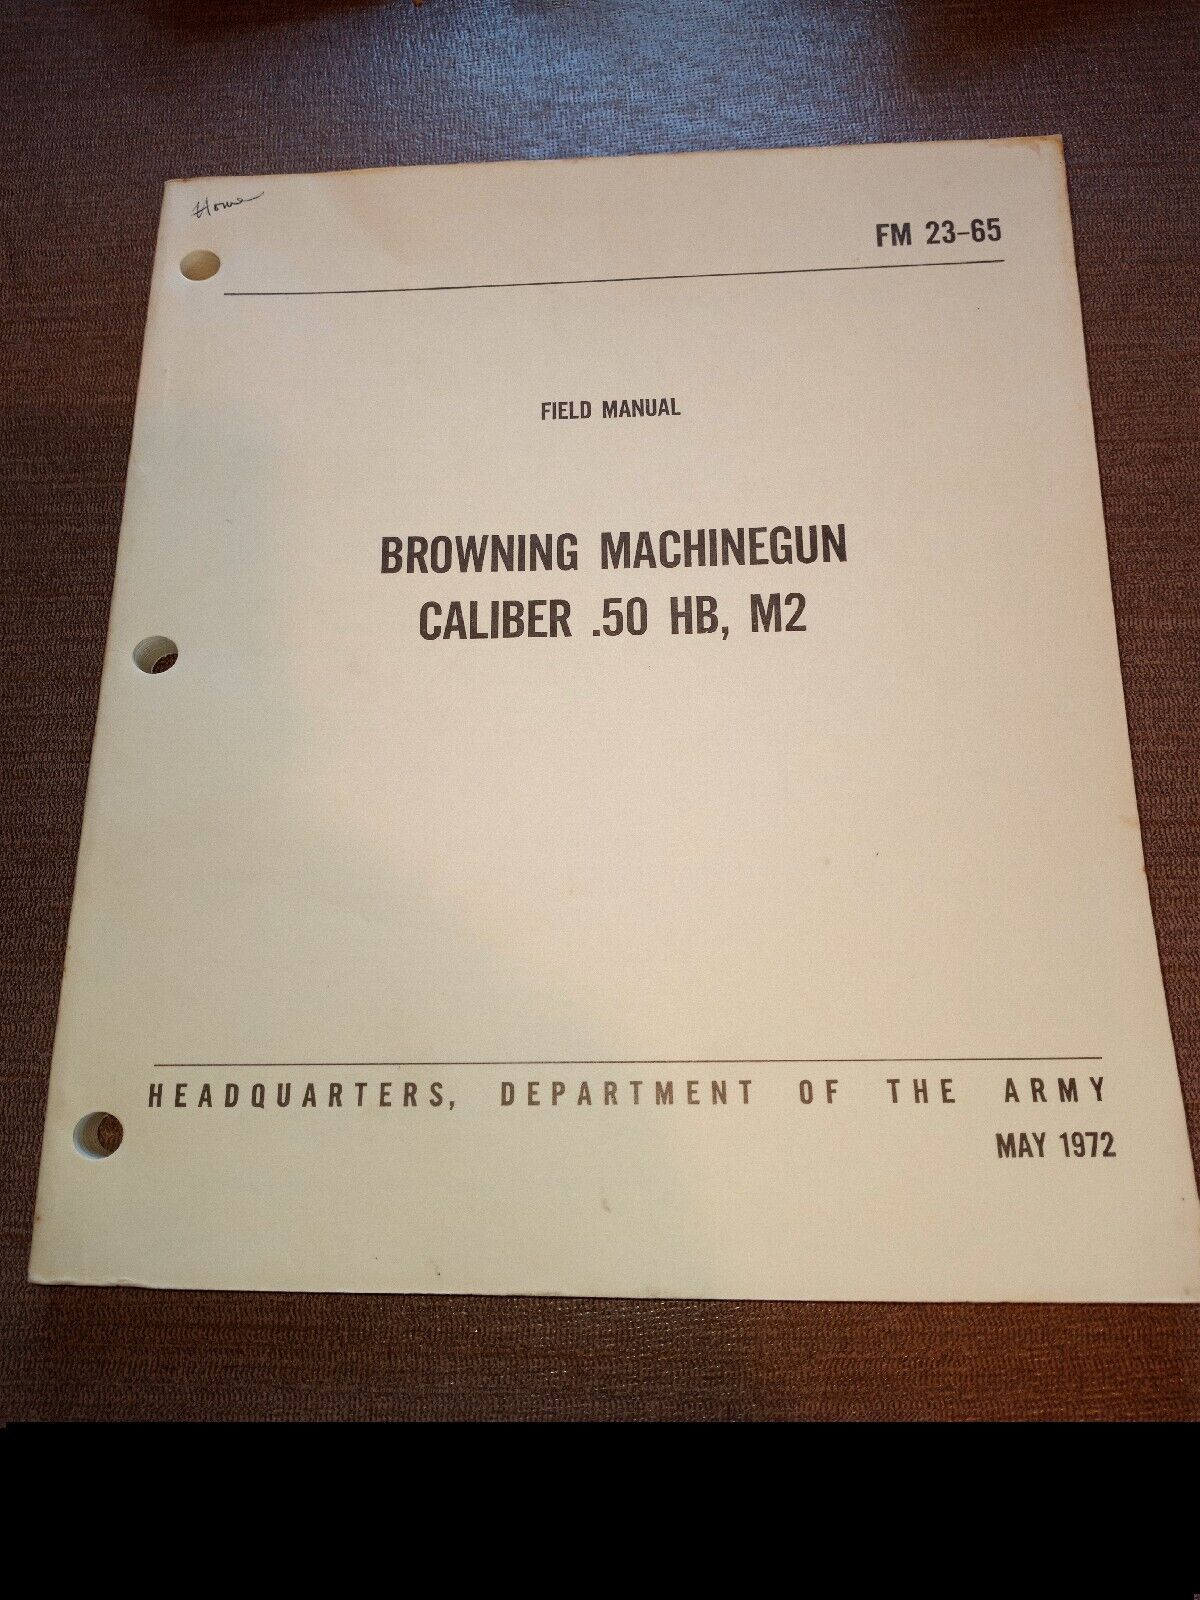 Army Manual~Browning MachineGun, Caliber .50 HB,M2~FM 23-65  (1972)